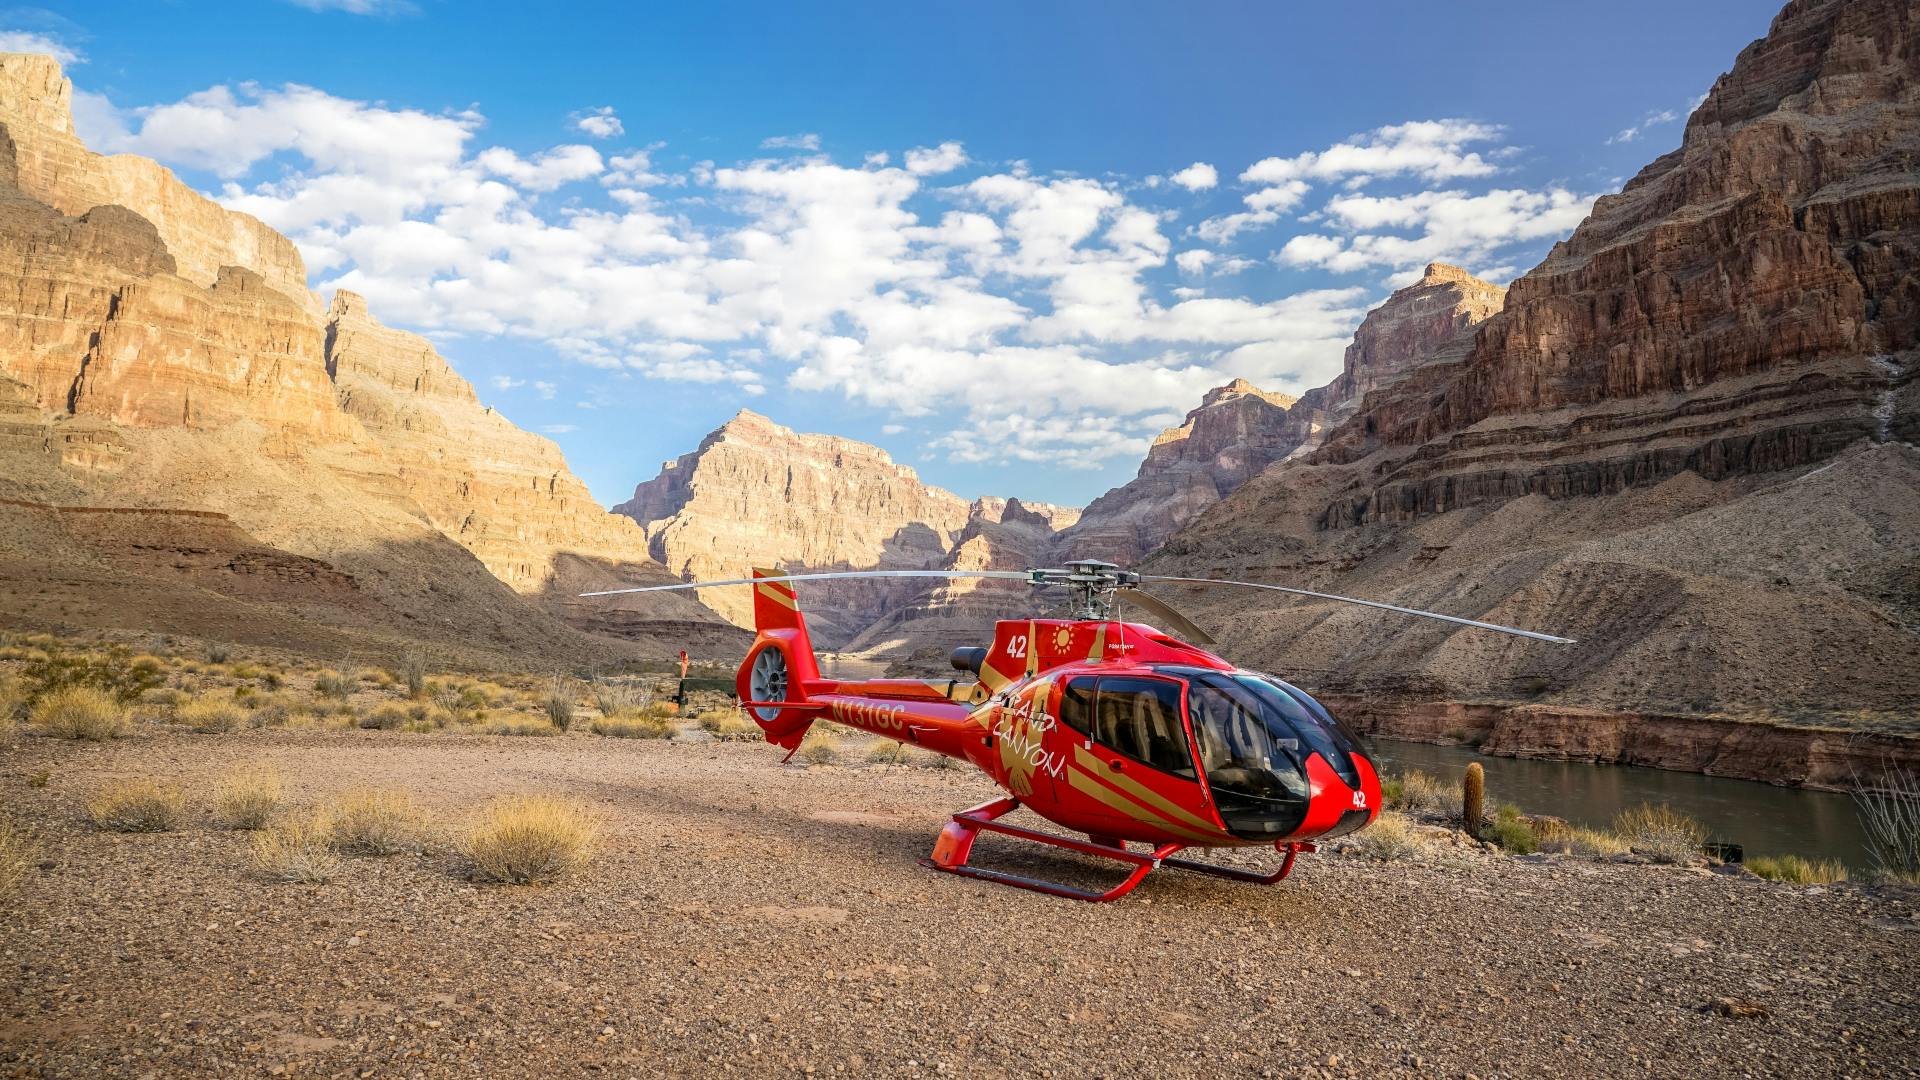 Grande excursion en hélicoptère au Grand Canyon avec pique-nique